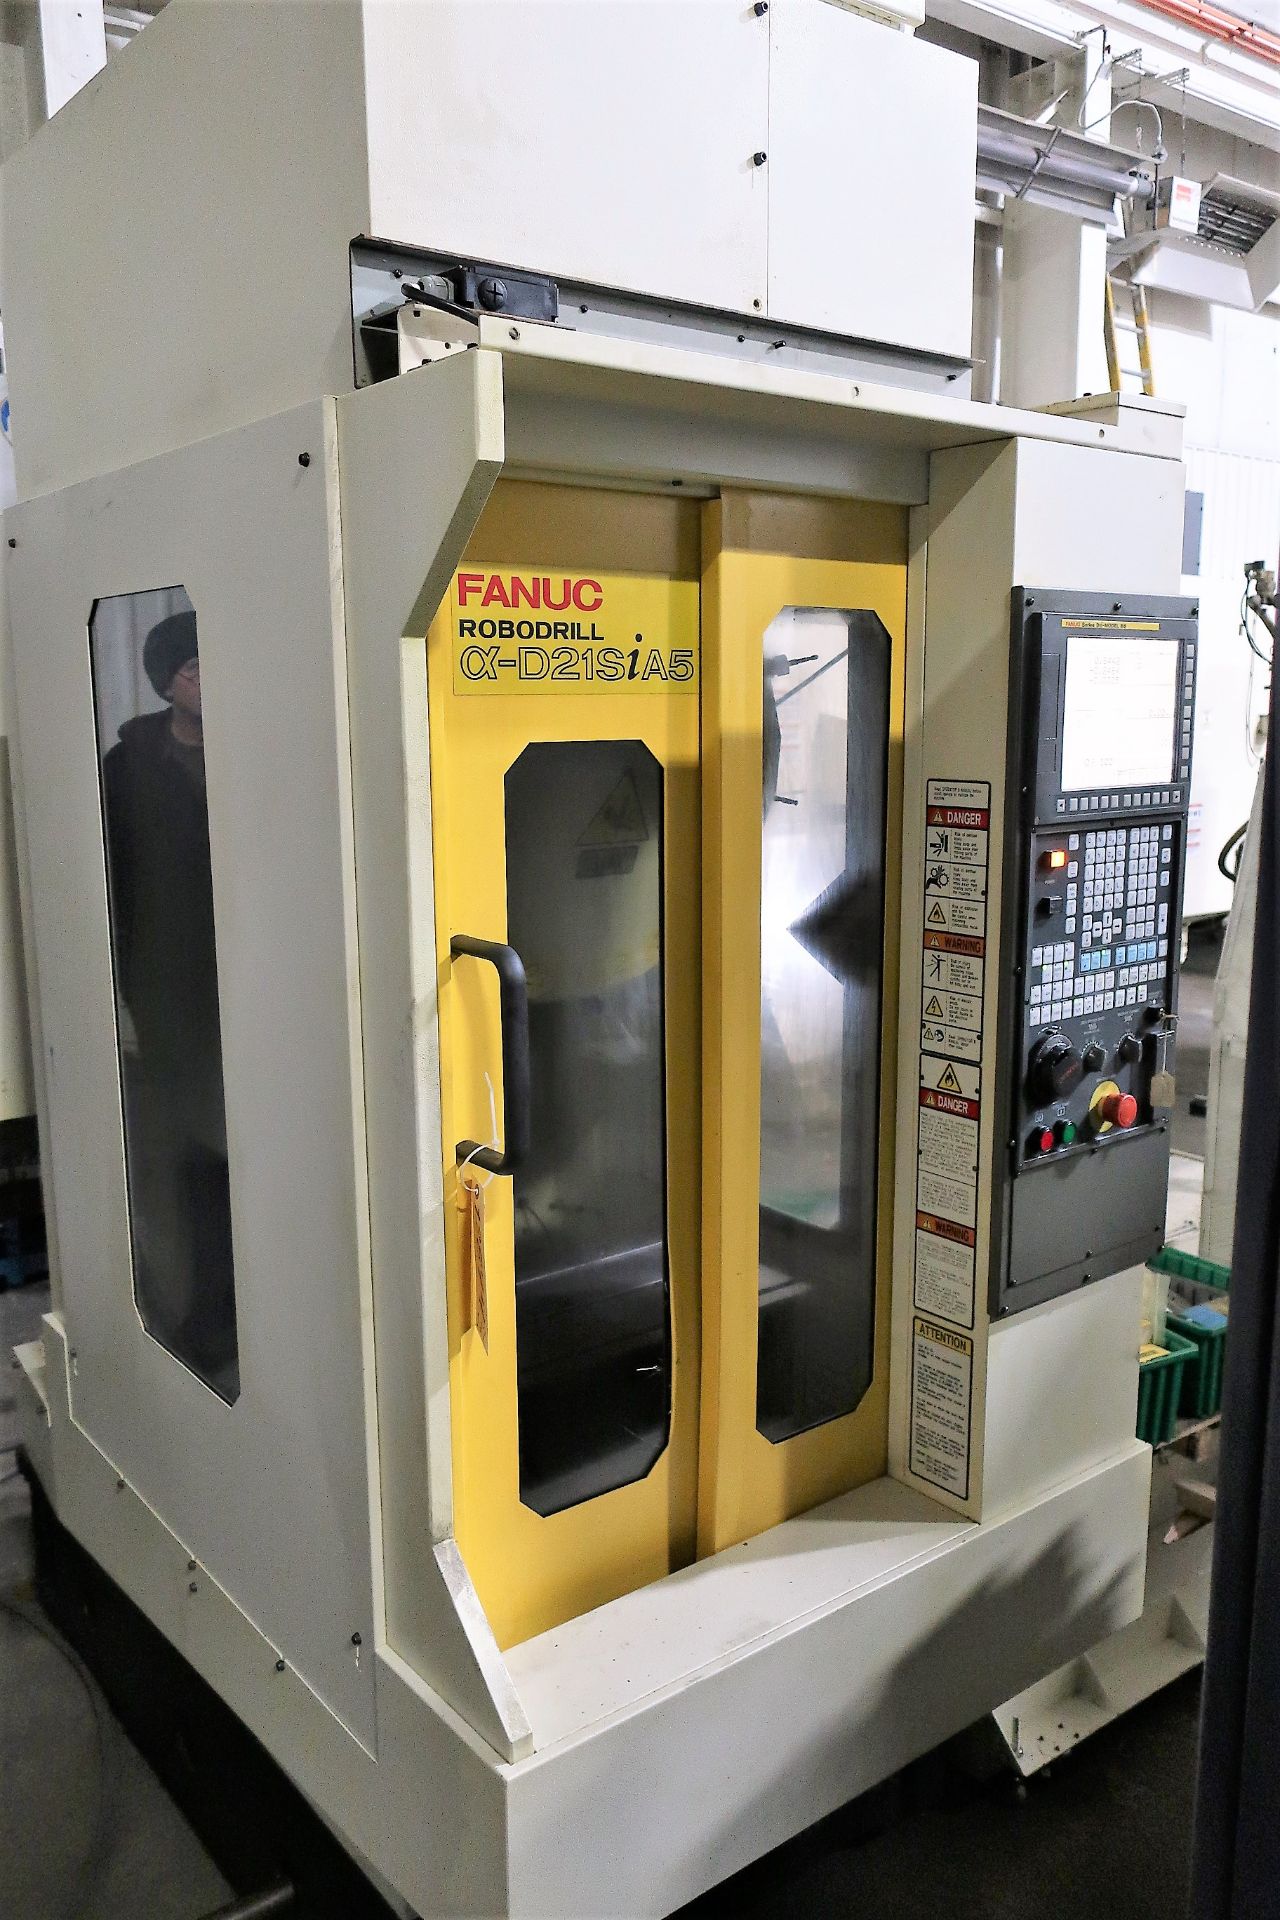 FANUC ROBODRILL ALPHA D21SiA5 CNC HIGH SPEED DRILL TAP VERTICAL MACHINING CNETR, NEW 2013